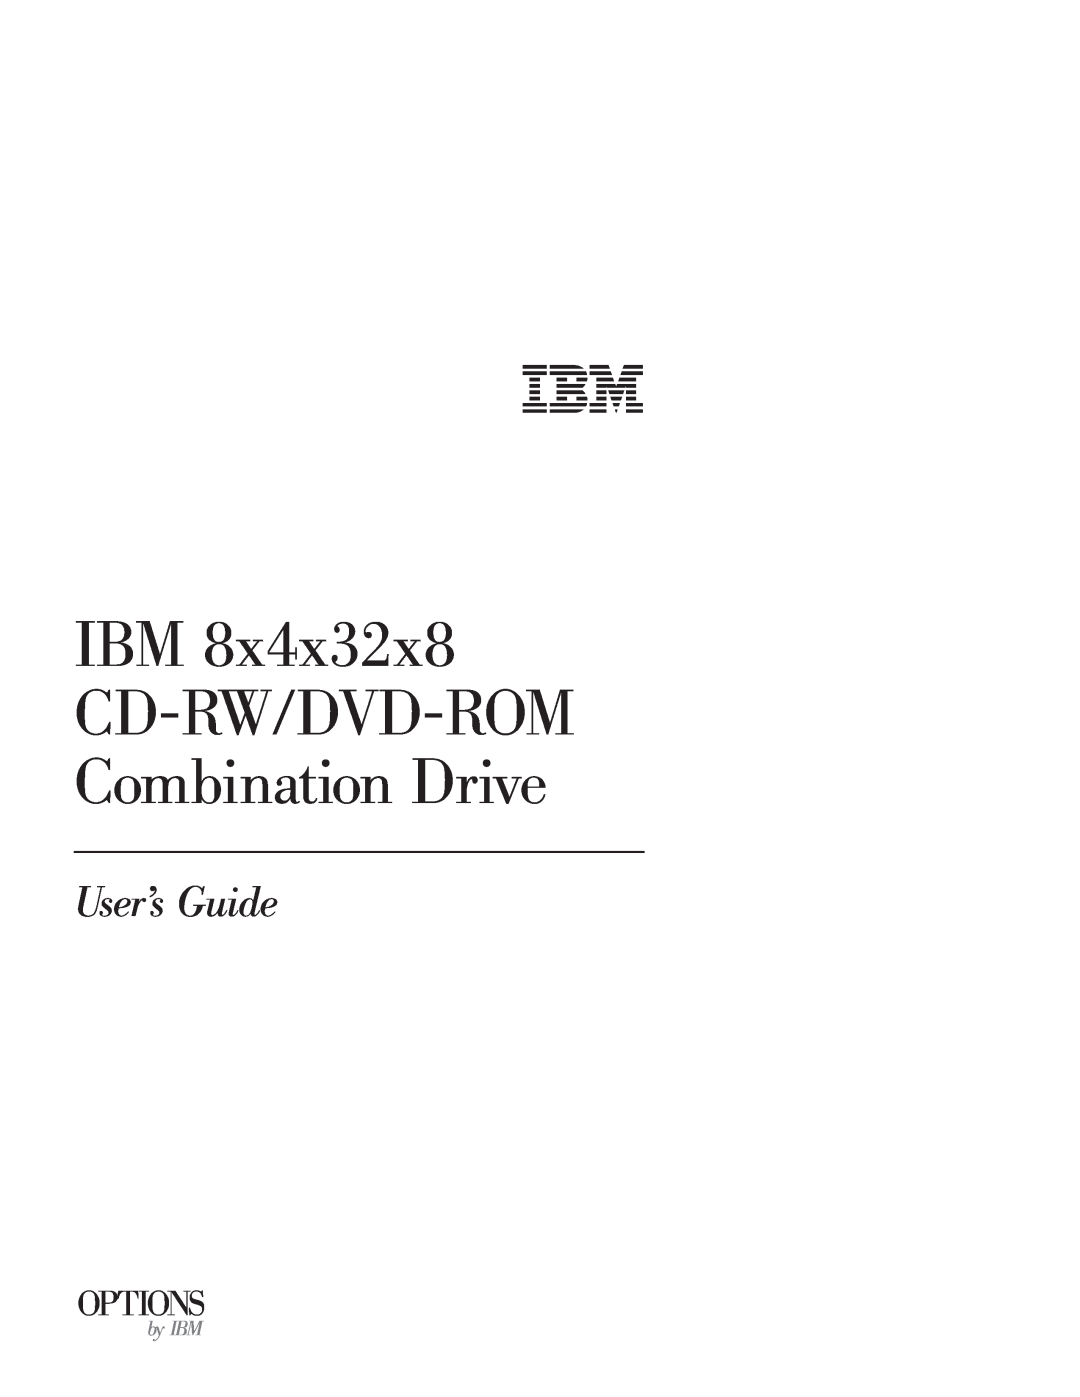 IBM 22P6959 manual IBM CD-RW/DVD-ROM Combination Drive, User’s Guide, Options, by IBM 